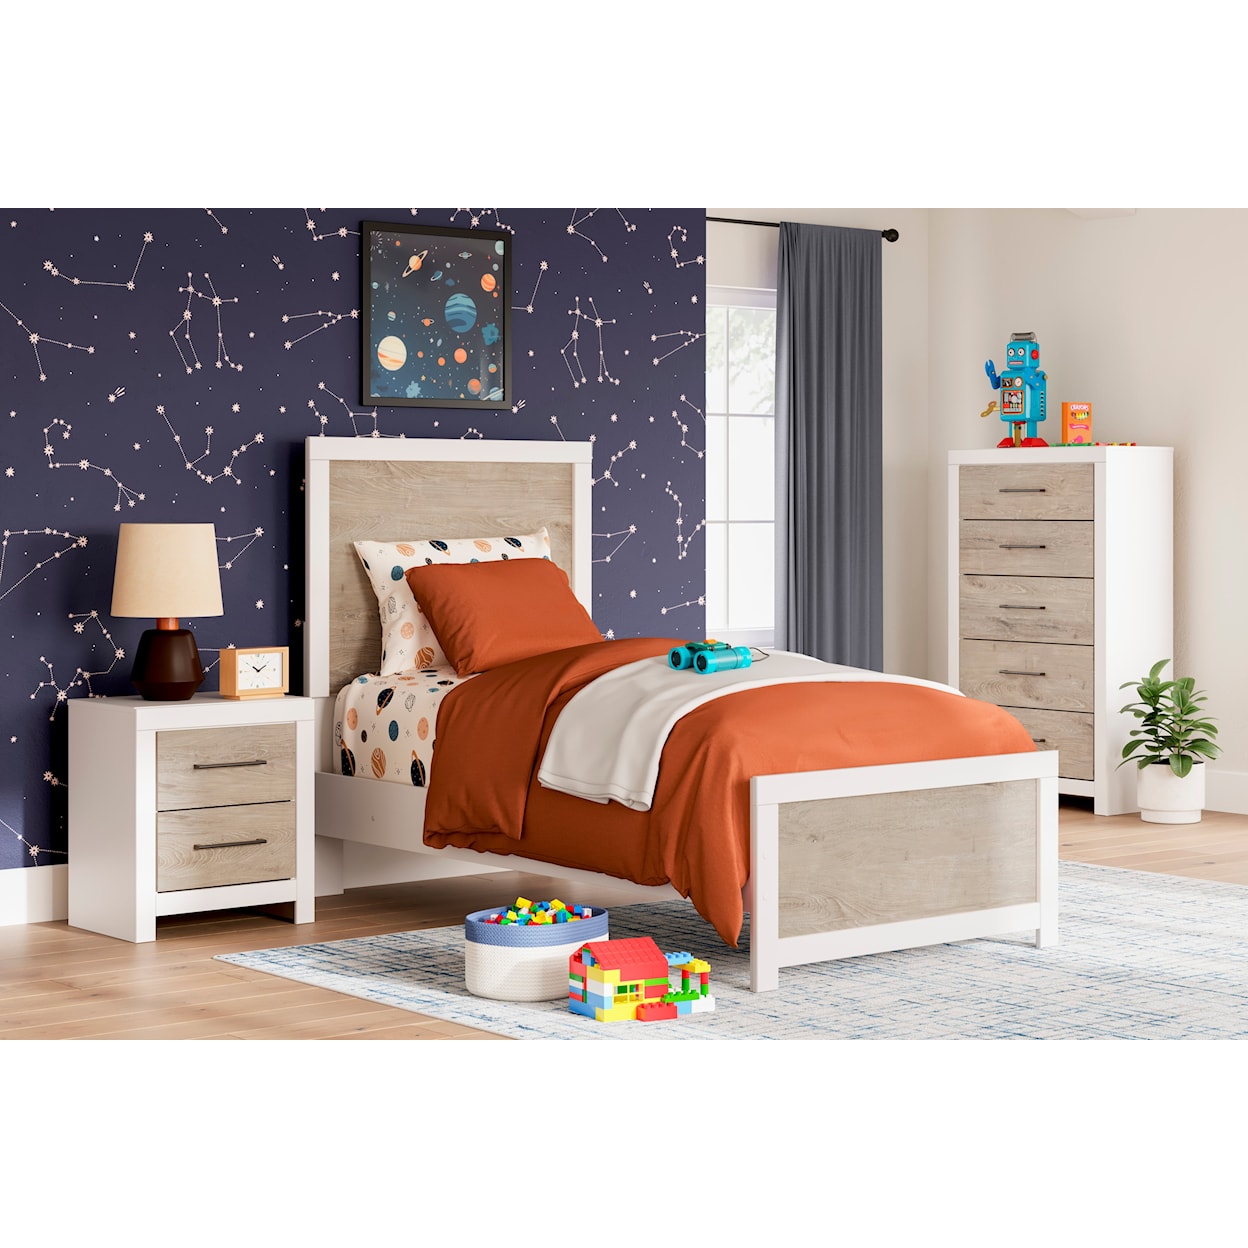 Ashley Furniture Signature Design Charbitt Twin Bedroom Set